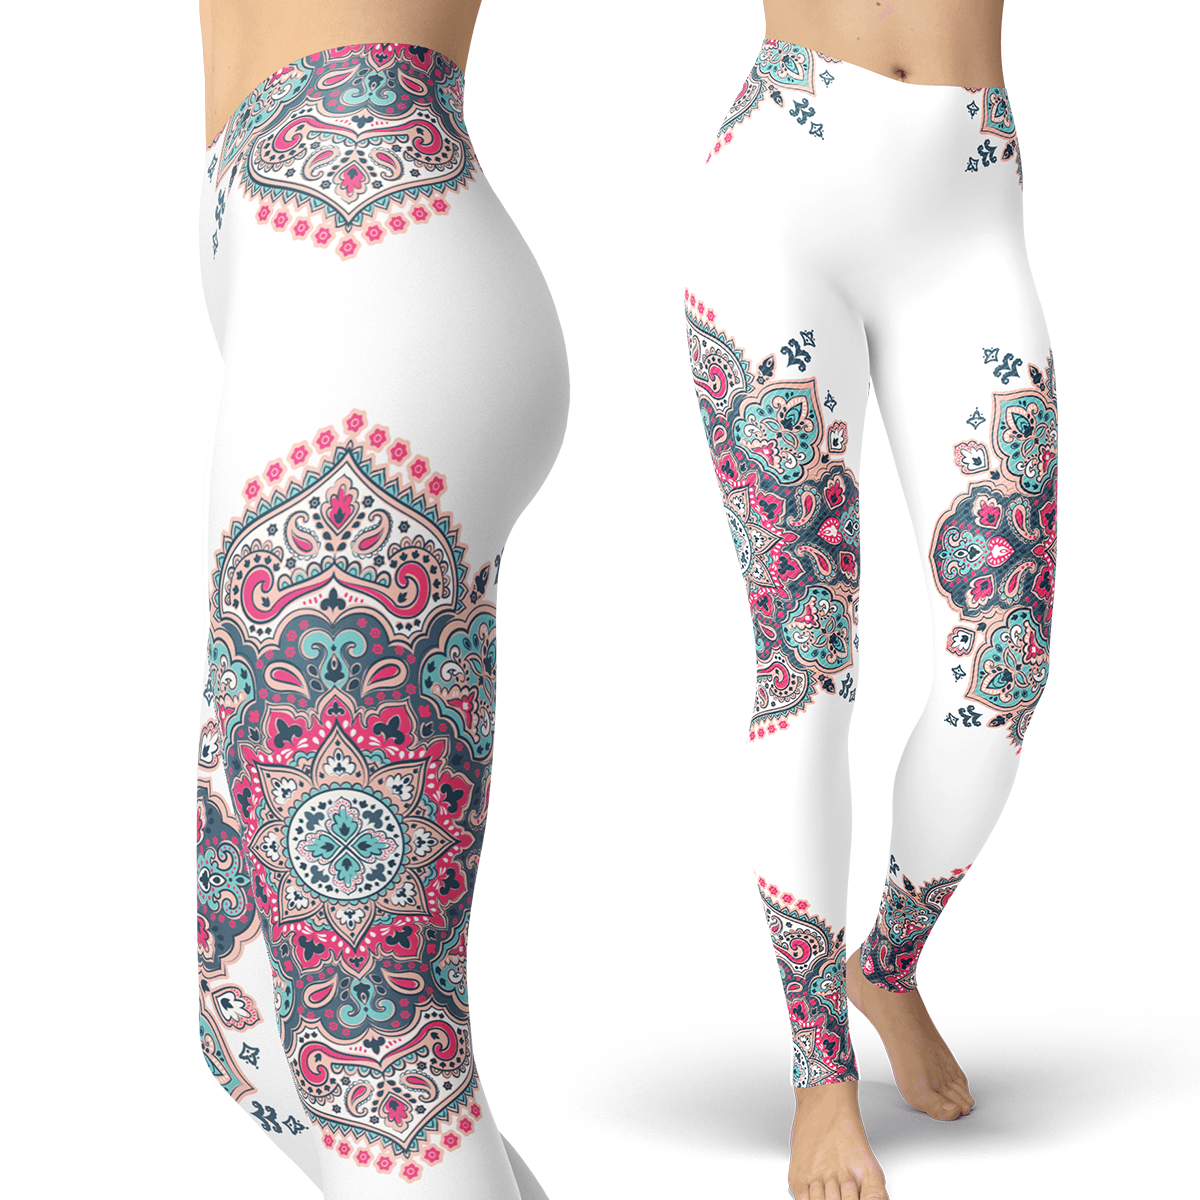 Snowflake Leggings  Fitness Yoga Pants